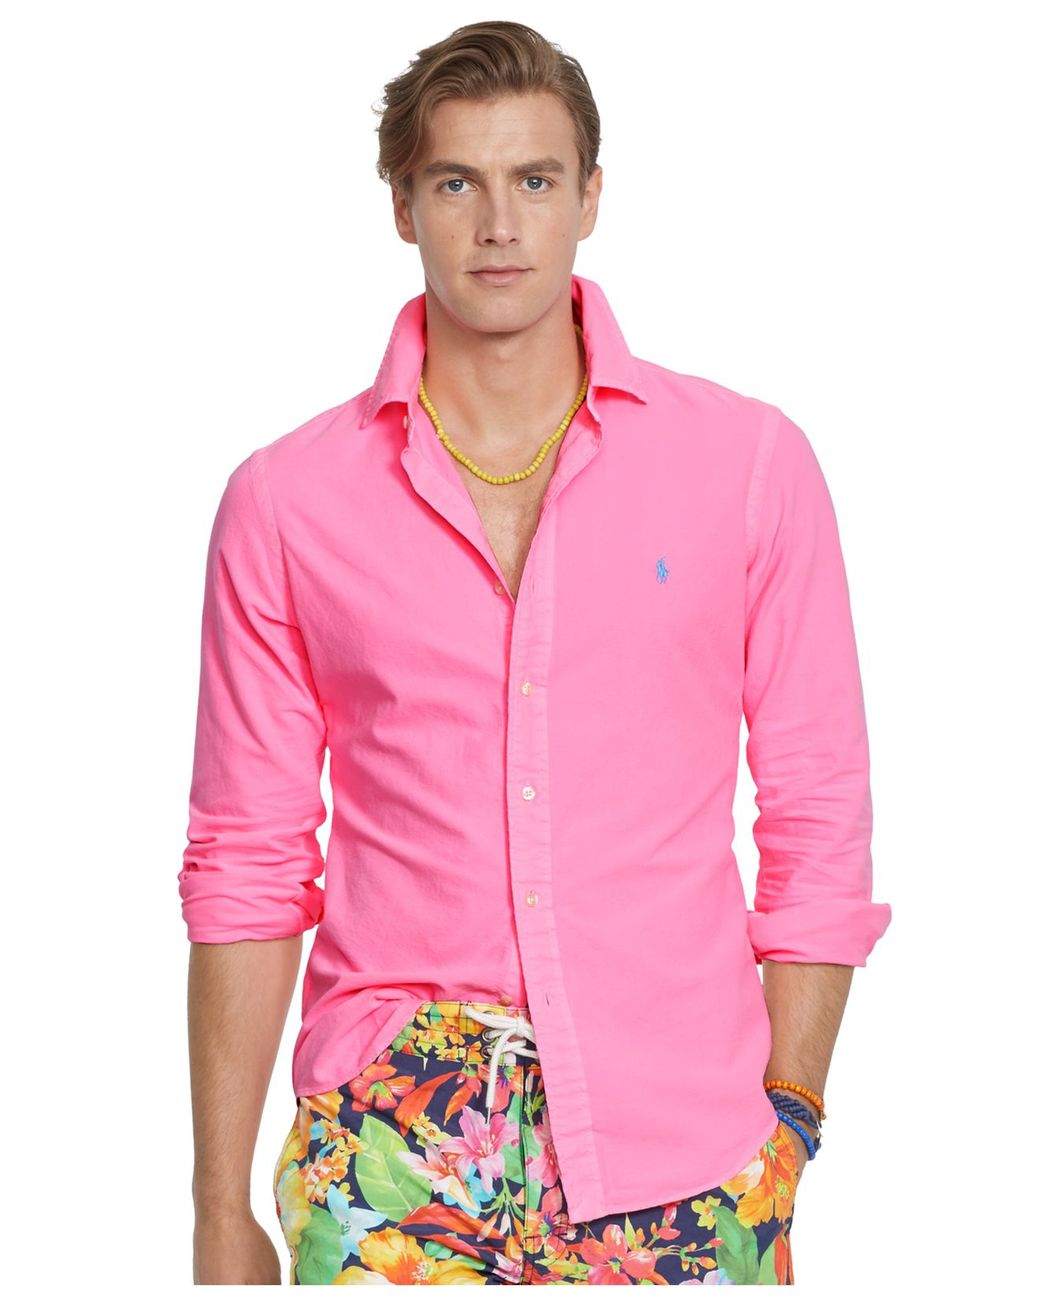 Tommy Hilfiger Stretch Oxford Shirt Slim Fit Buttondown In Pink